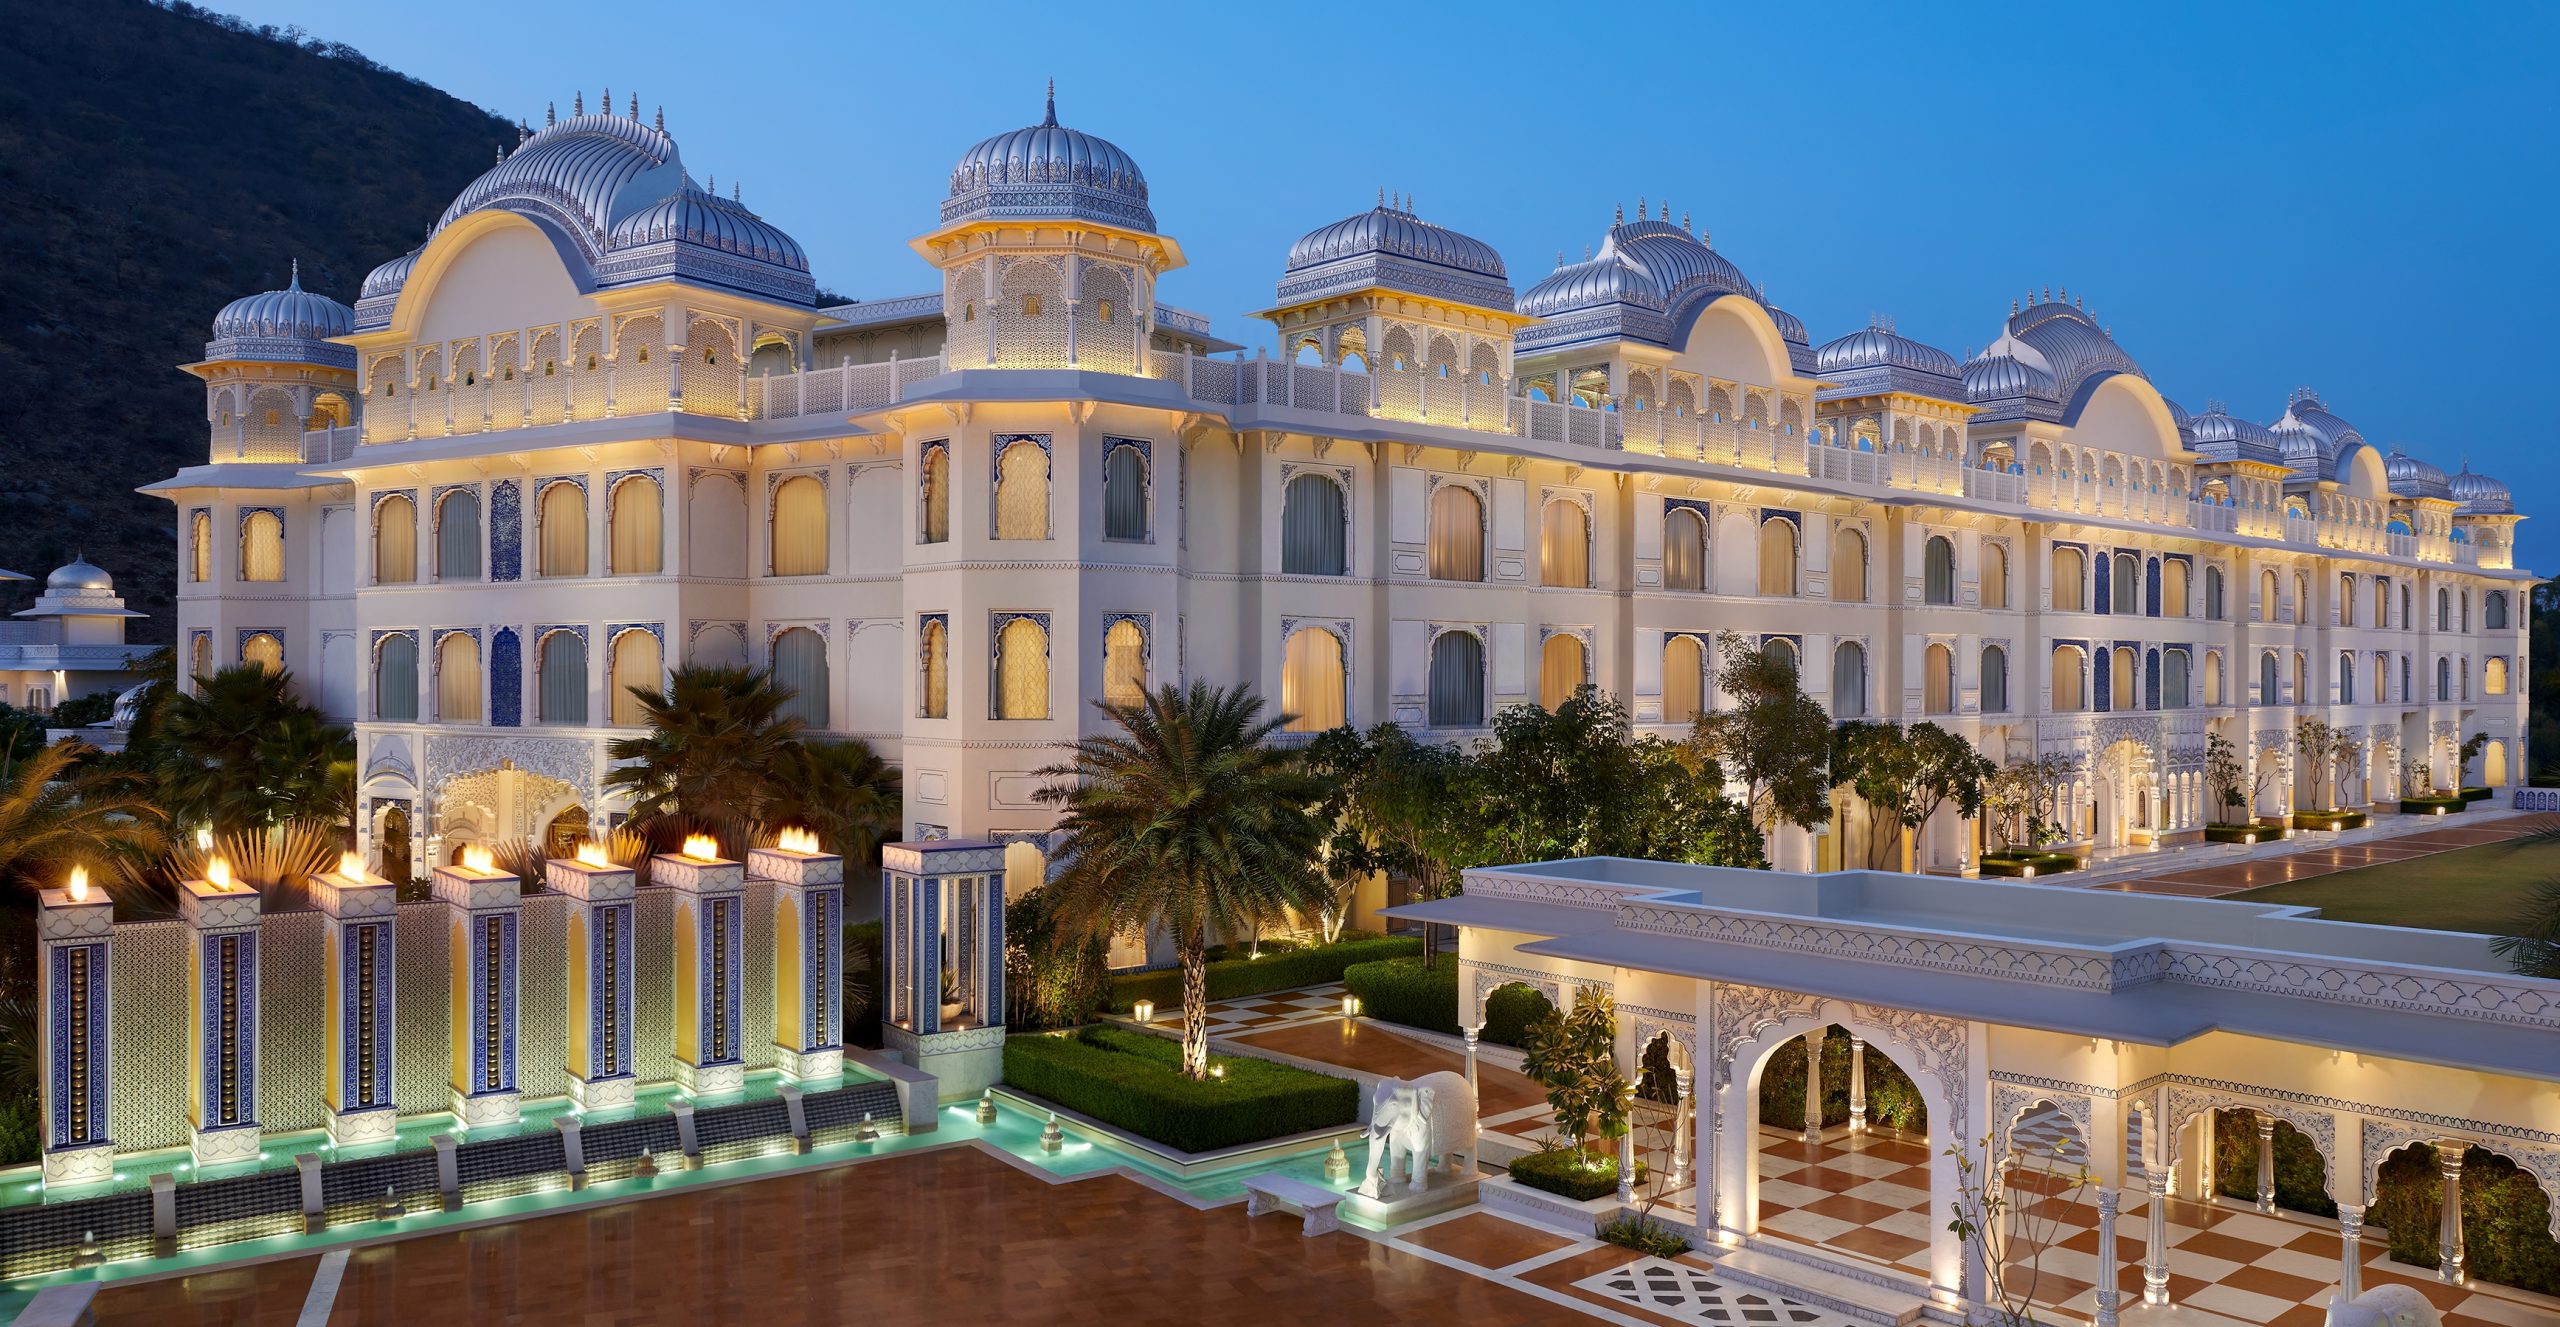 The-Leela-Palace-Jaipur-scaled.jpg